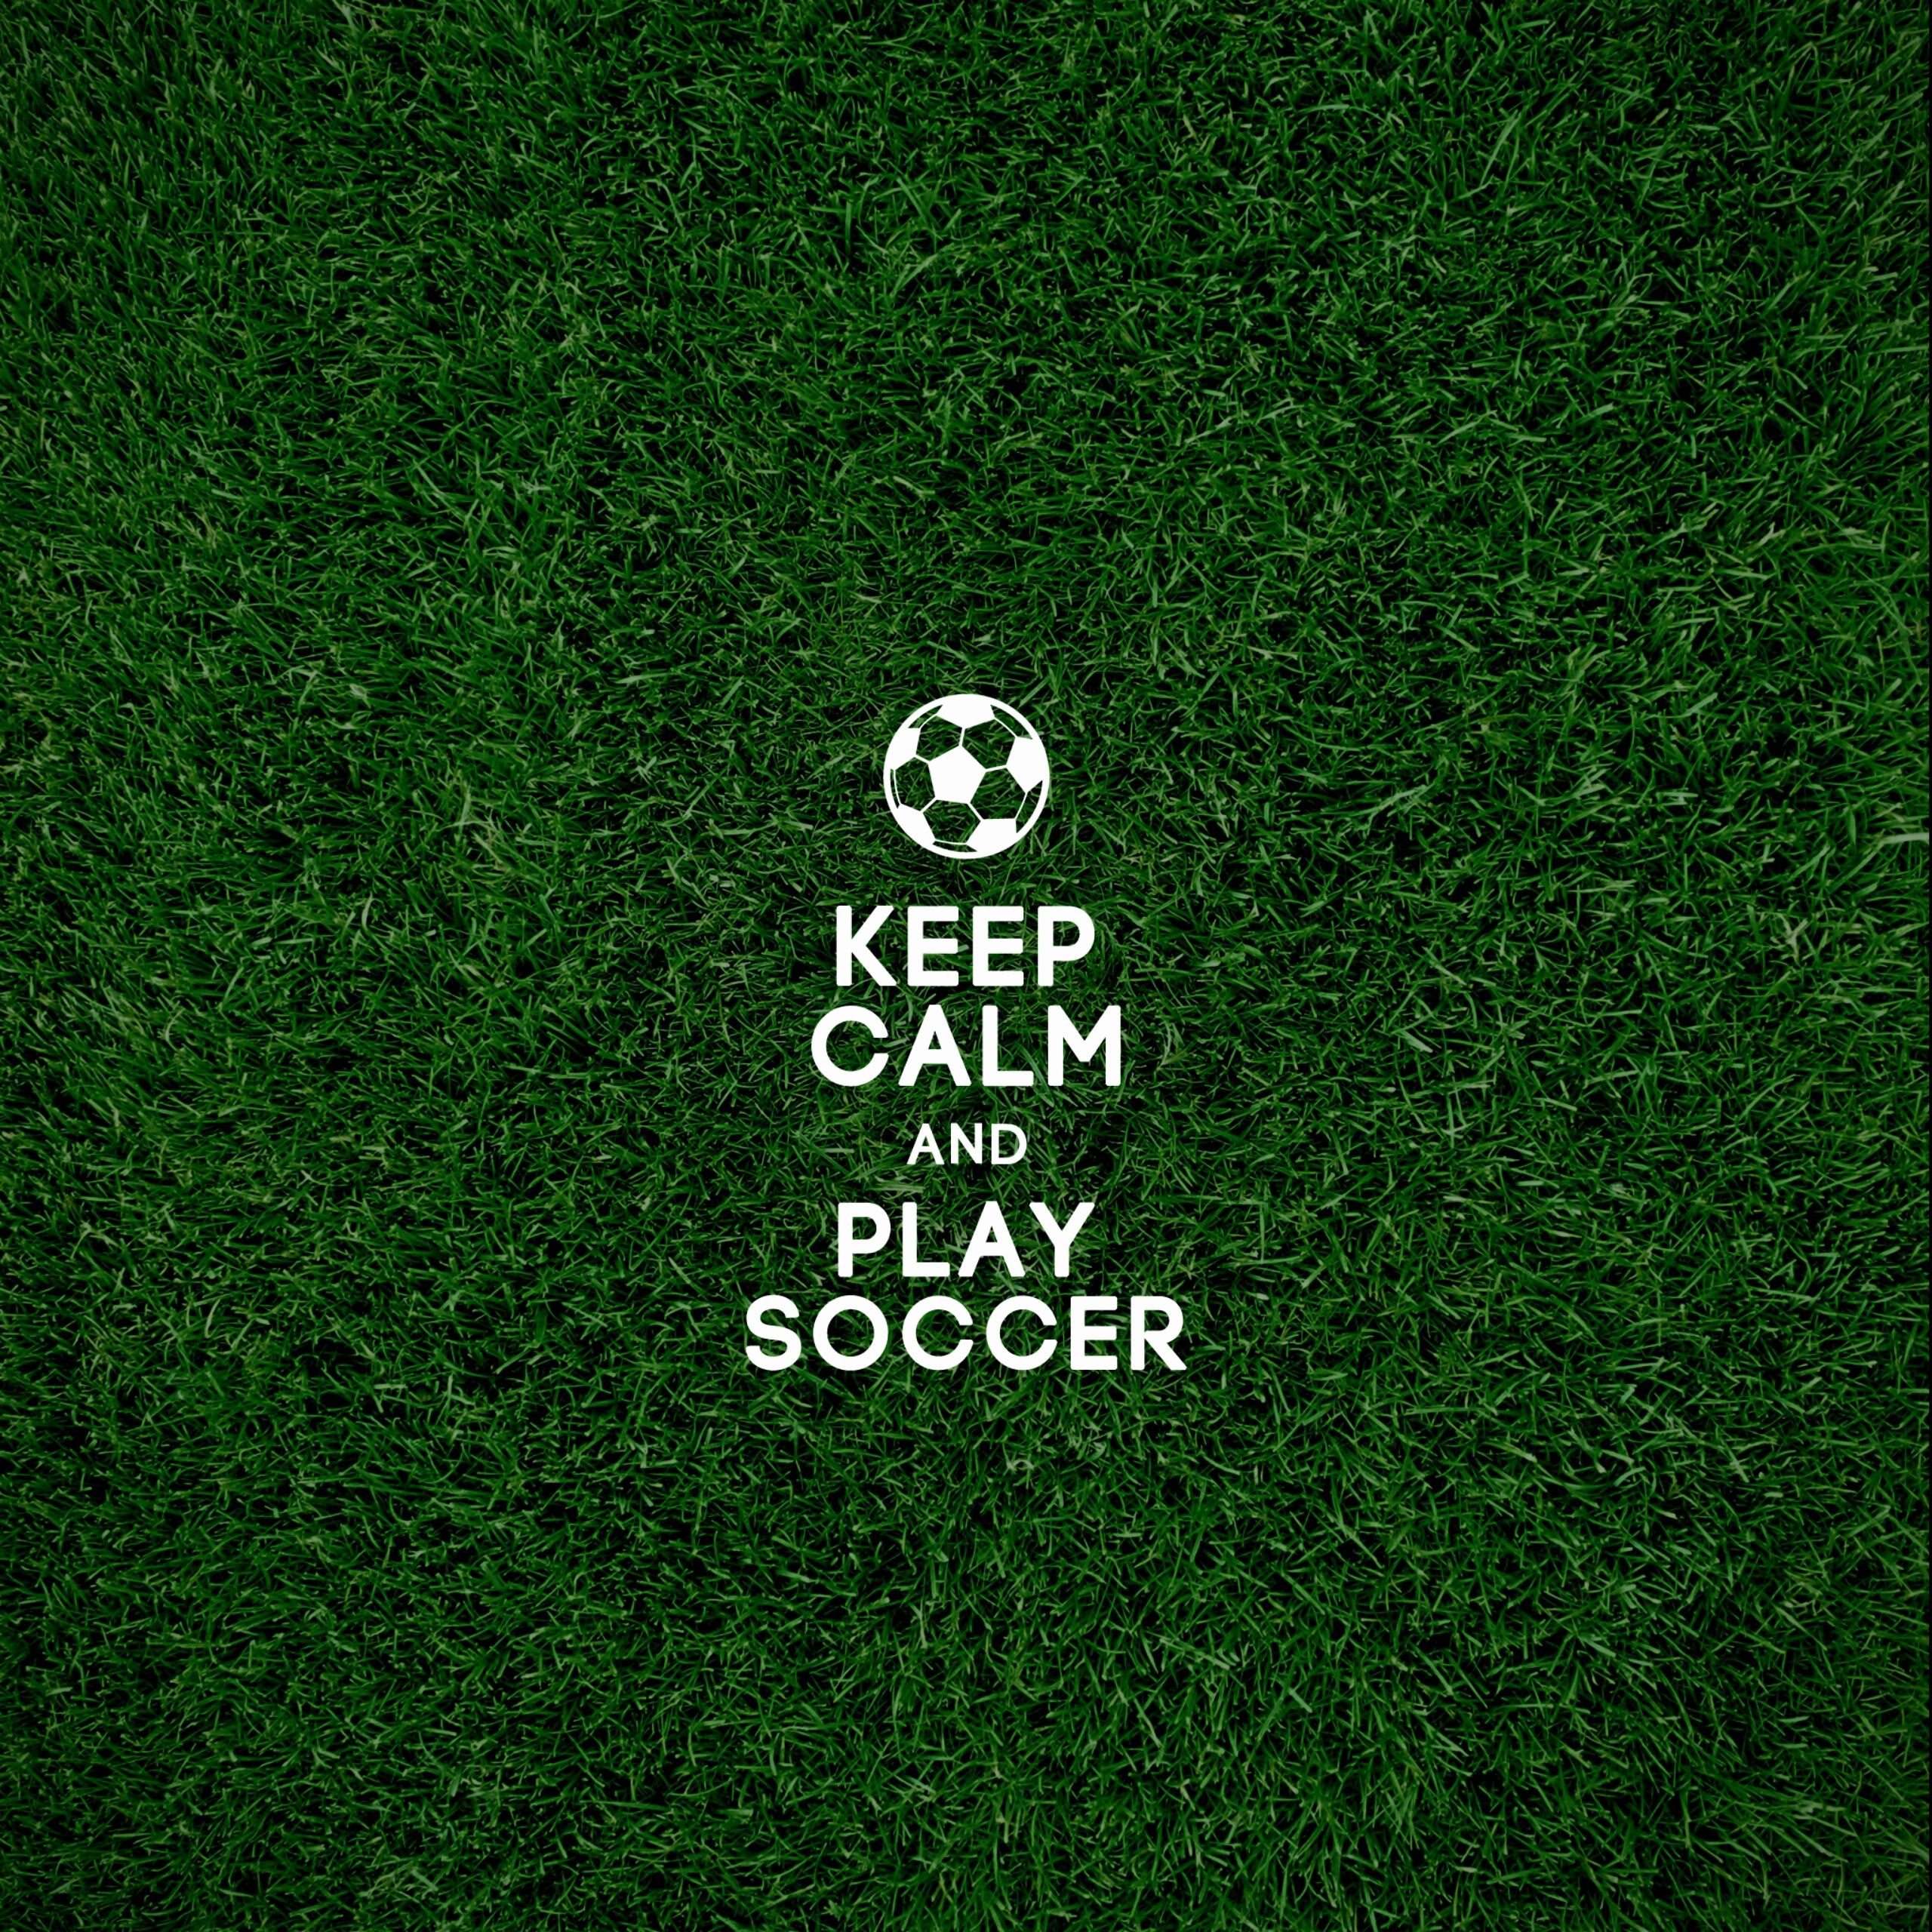 Keep Calm Wallpaper Lovely Keep Calm and Play soccer soccer Football